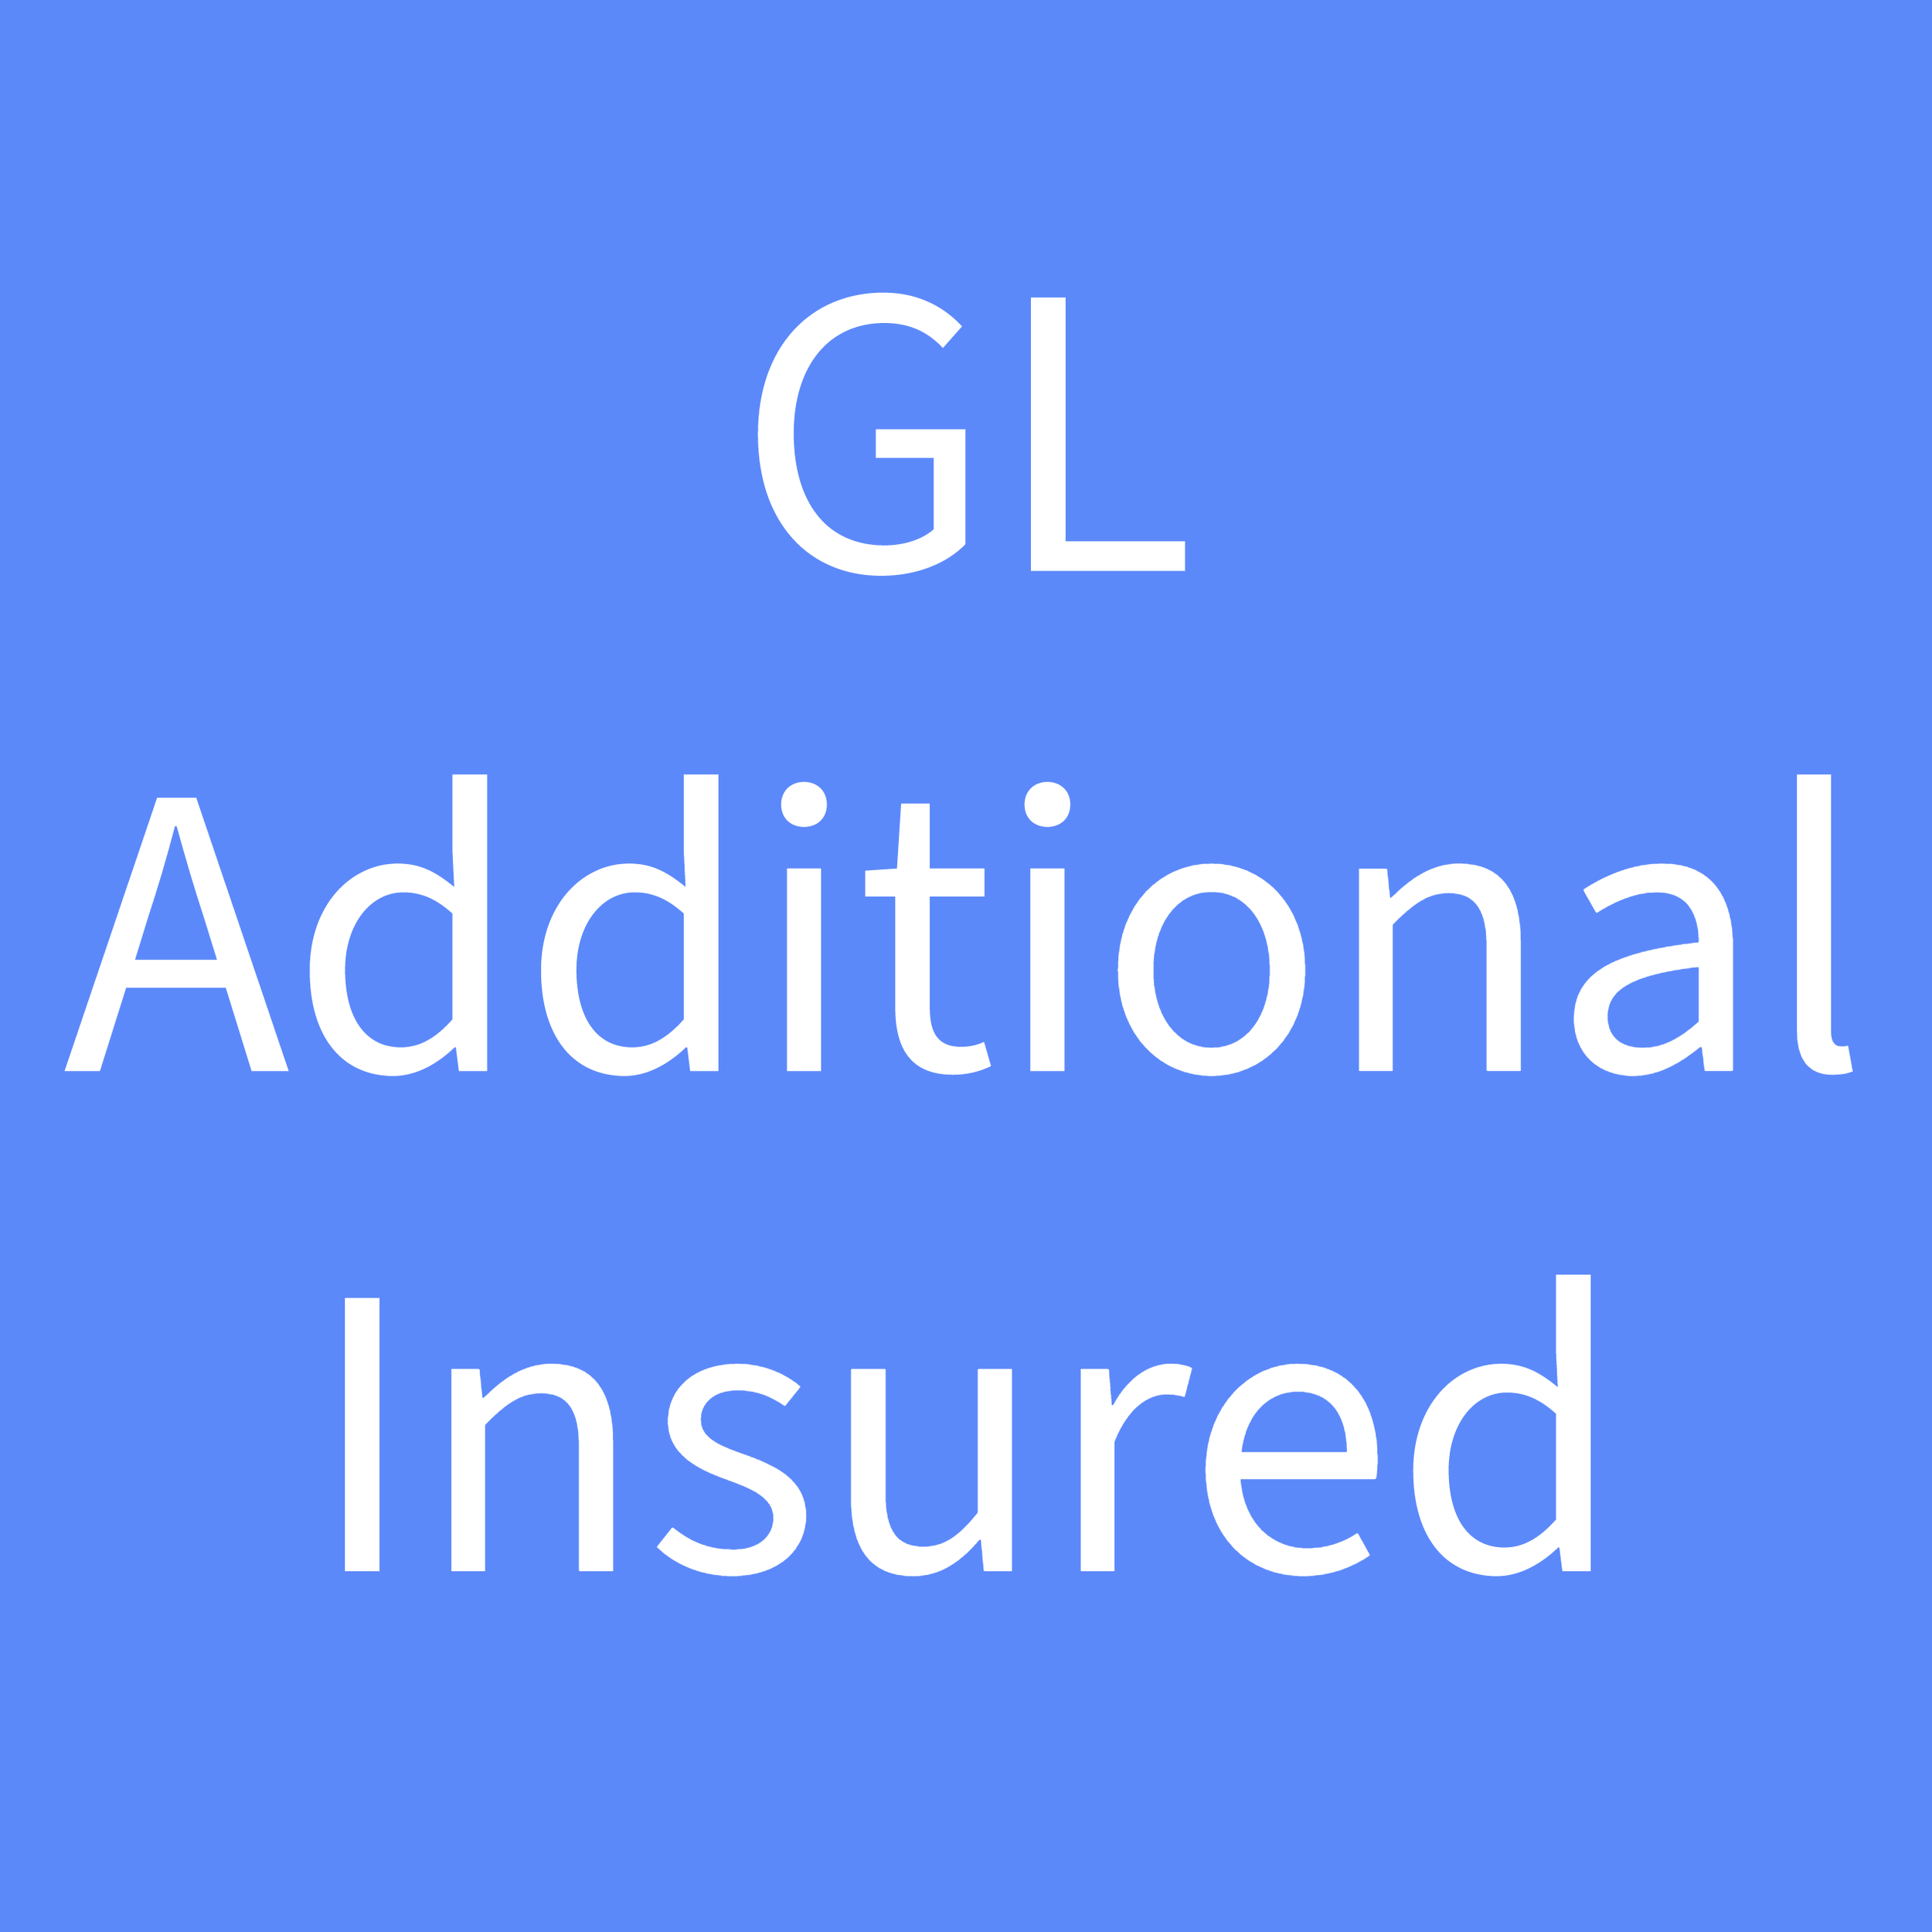 GL Additional Insured